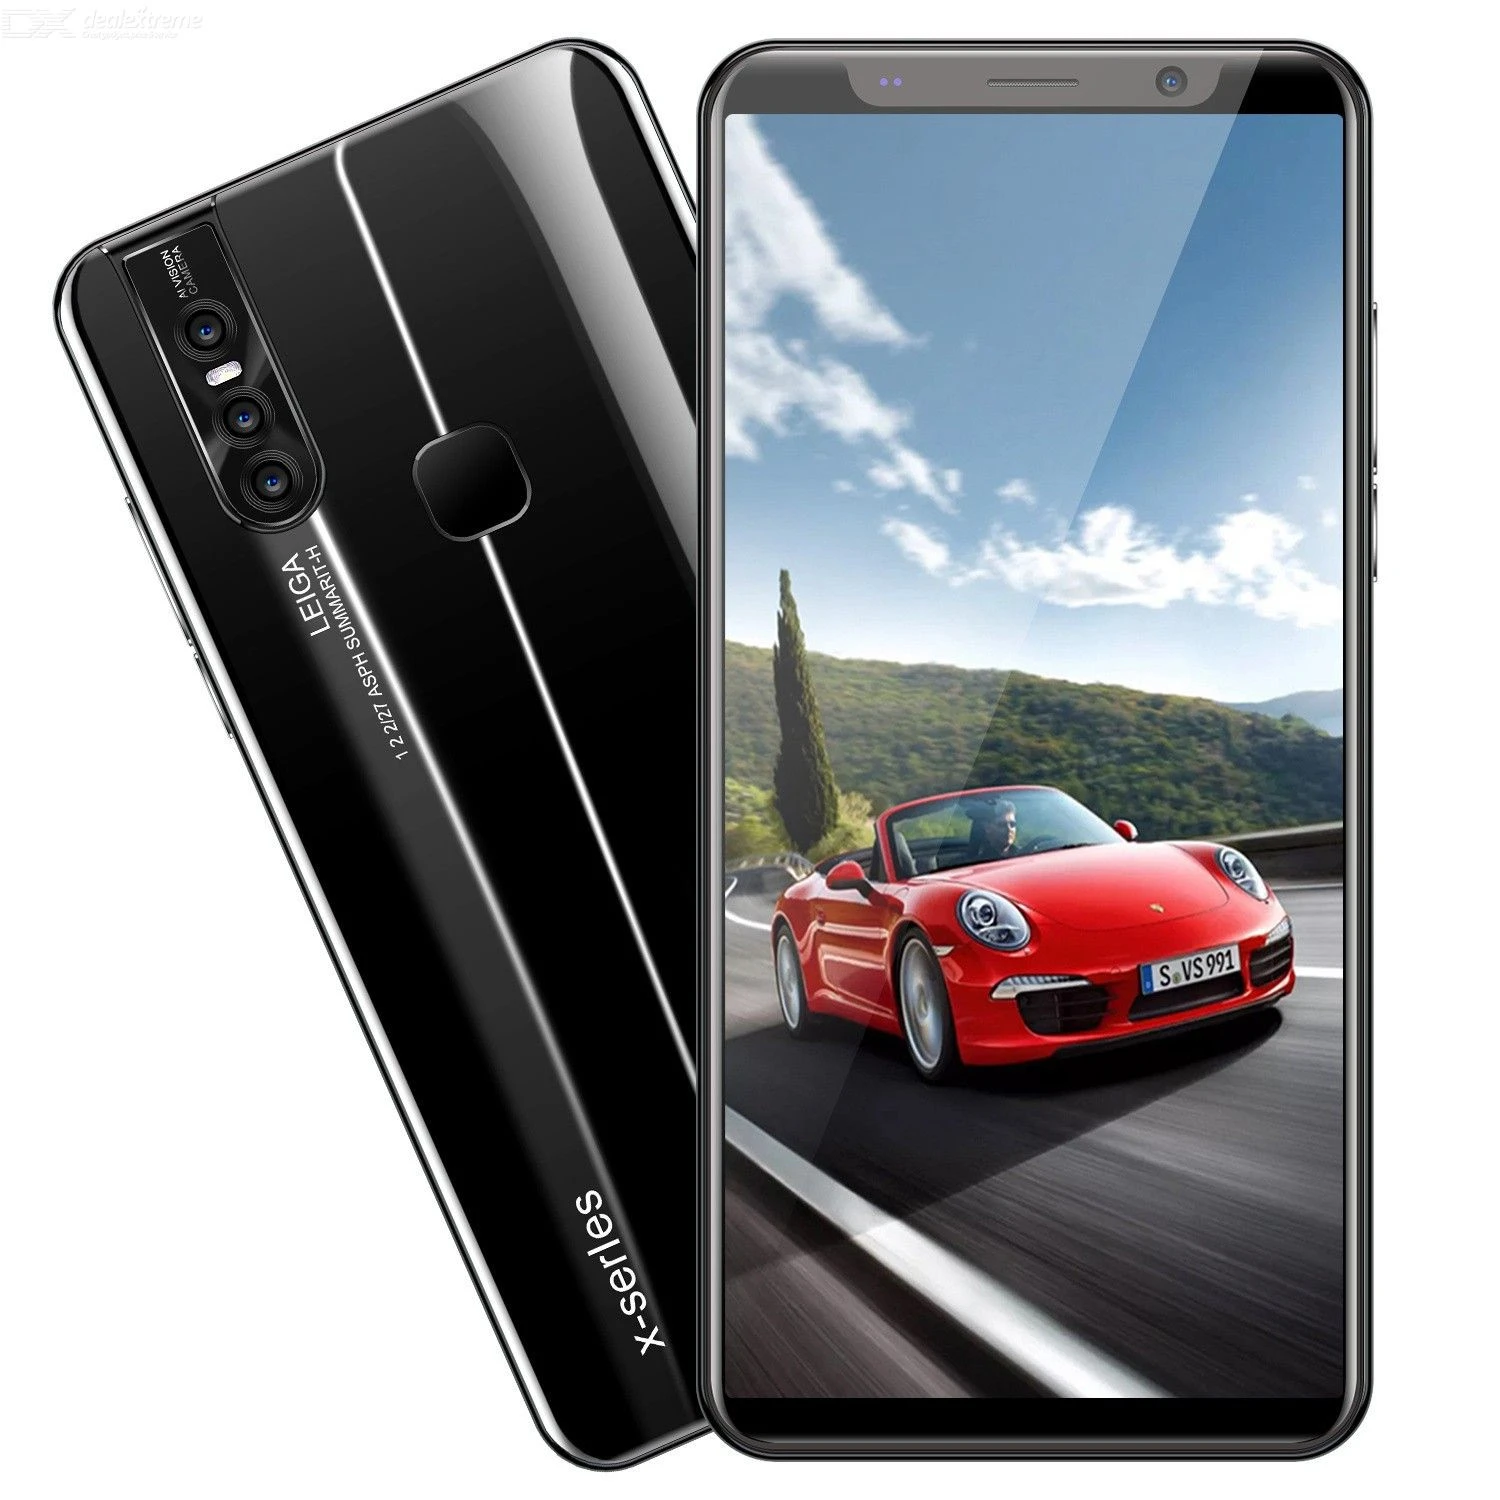 5.0 Inch X27 HD 512MB RAM+4G ROM 2+2 MP Cheap Mobile Smart Phone 3G Unlock Android Dual Sim Smartphones